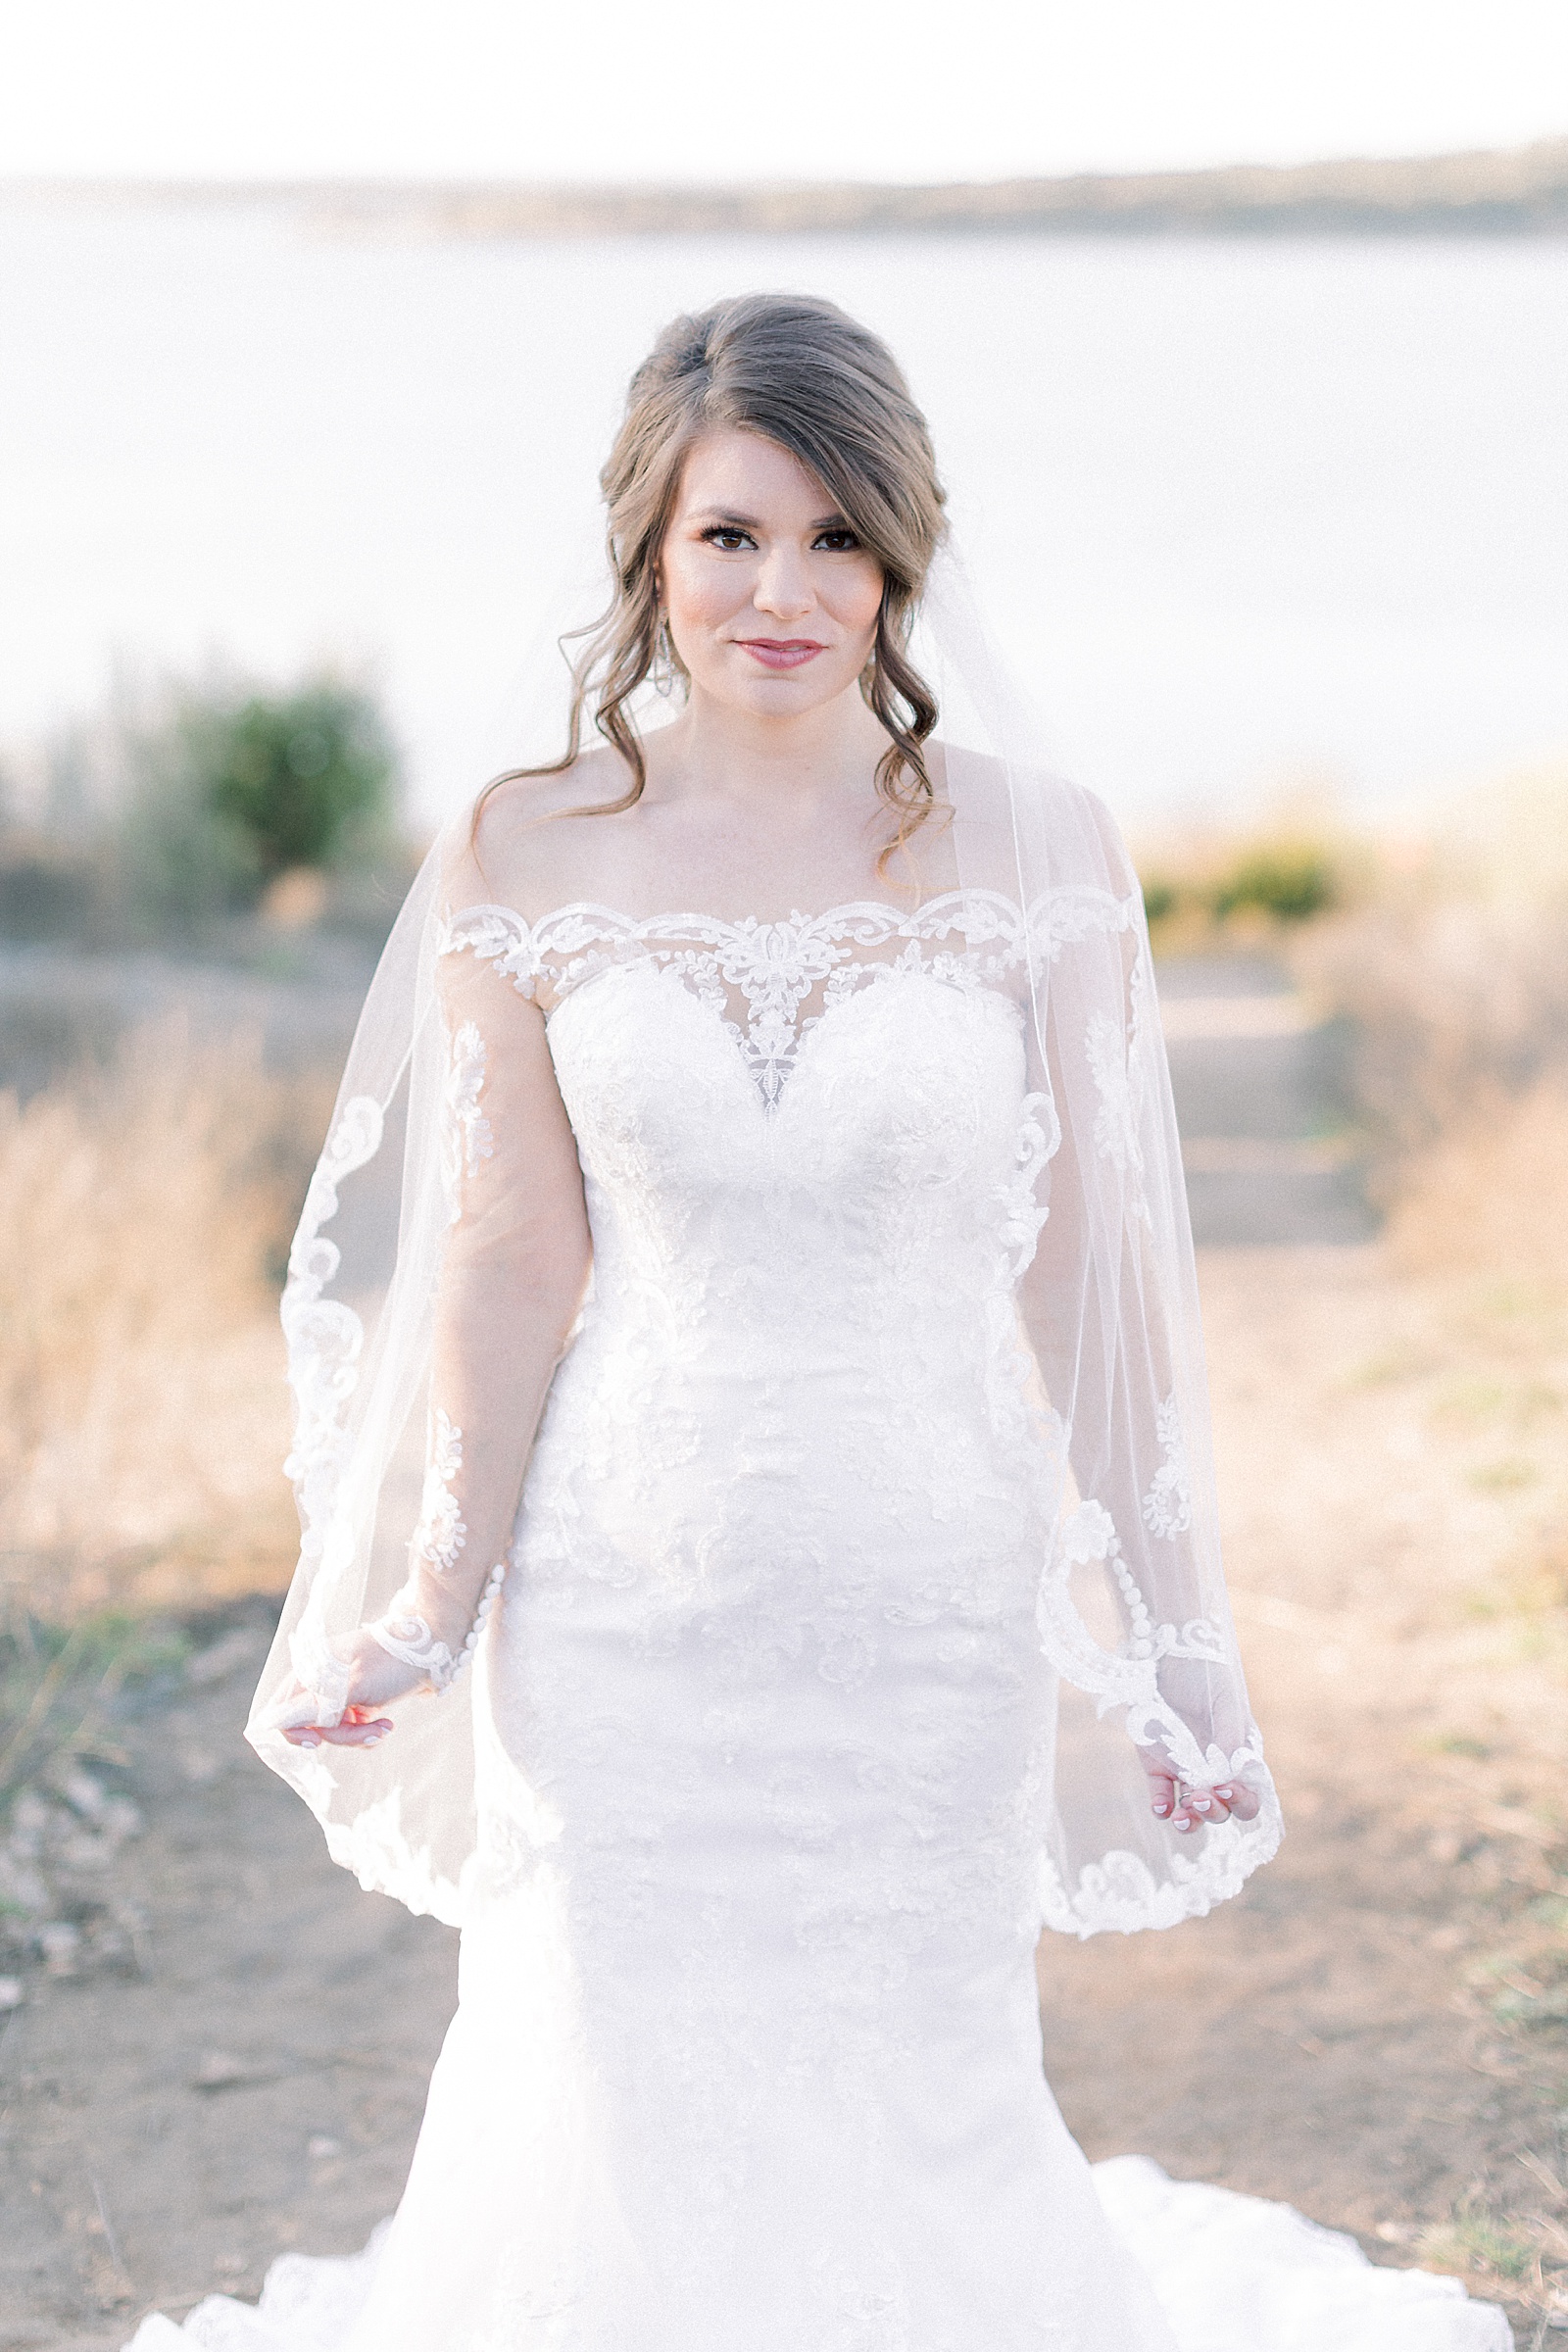 Best Bridal Portraits, Anna Kay Photography, San Antonio Wedding Photographer, Overlook Park, Canyon Lake, Texas